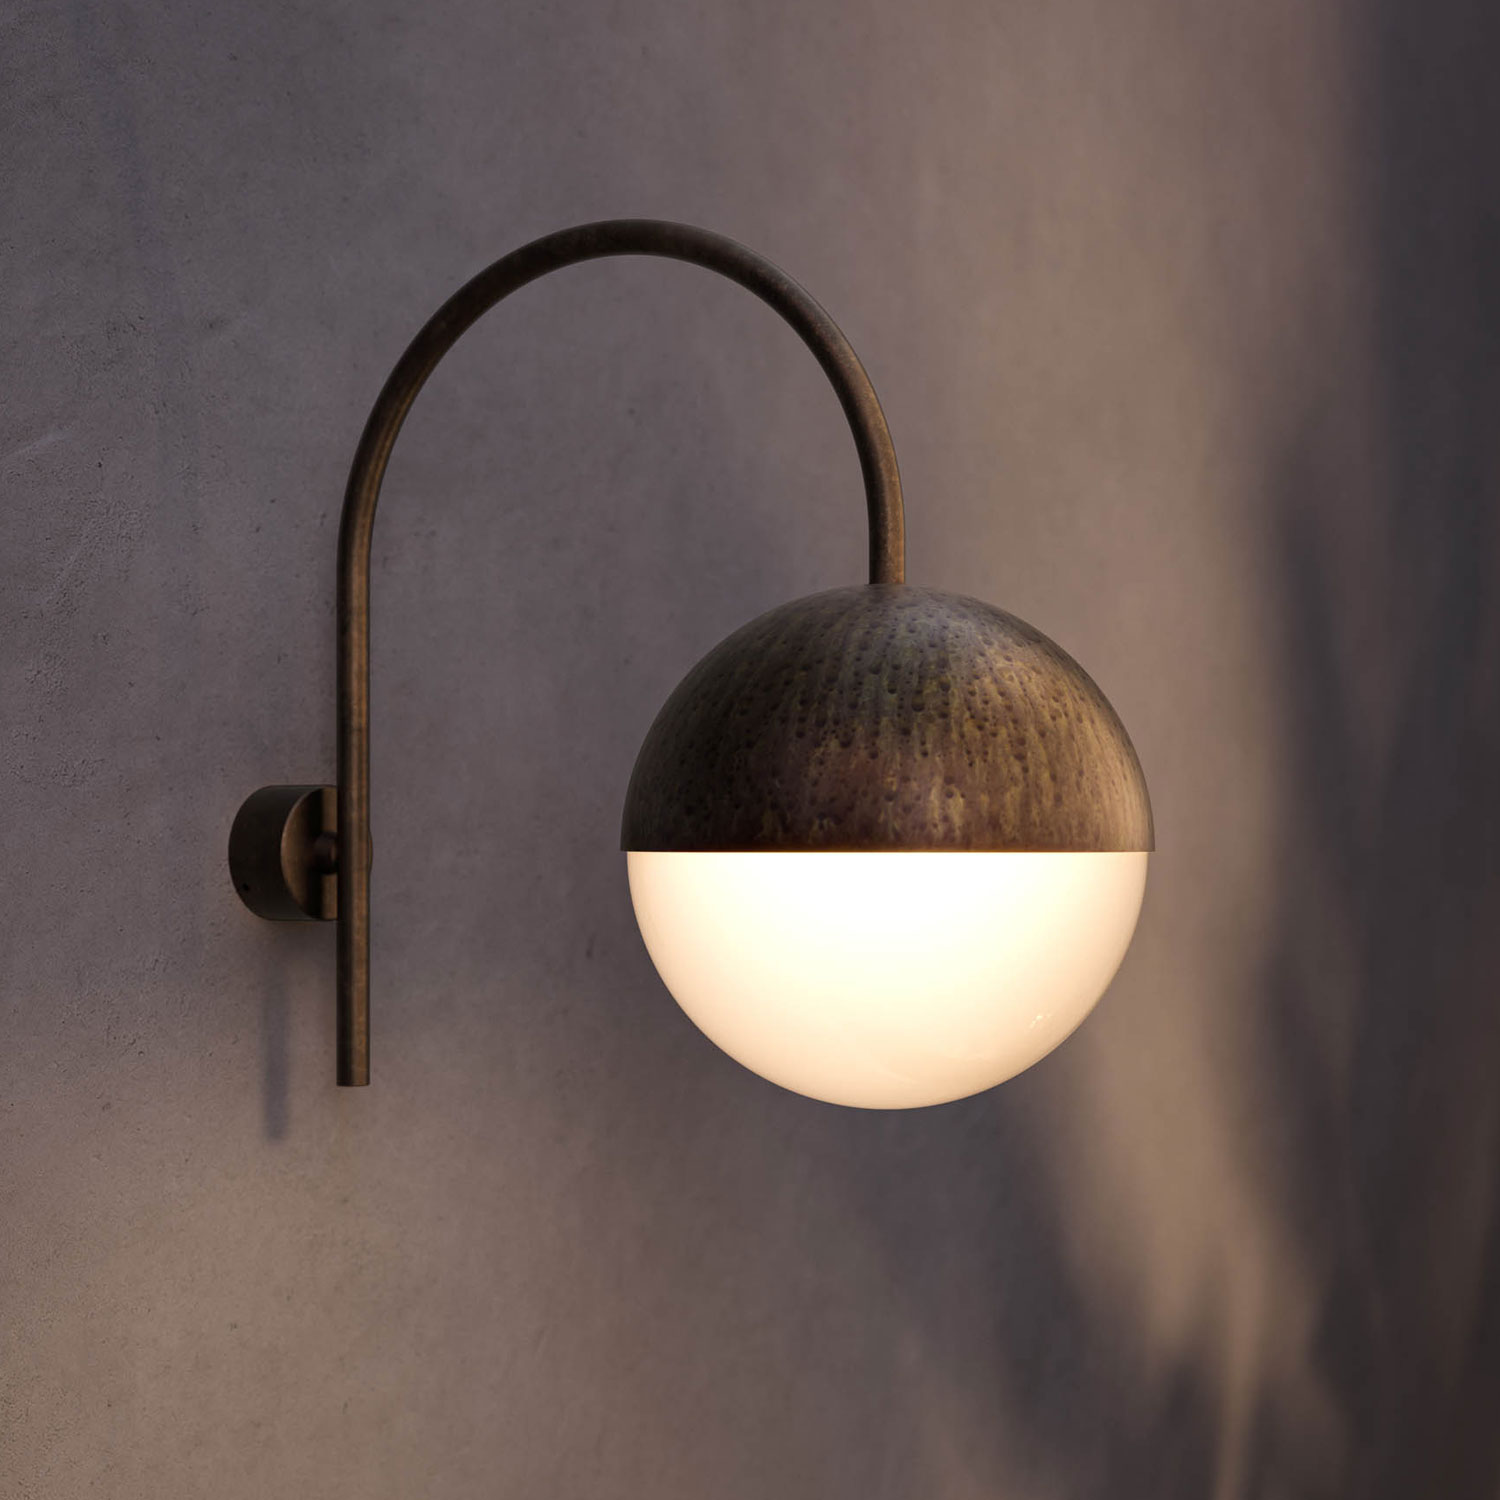 Sfera 291.06.OOB outdoor wall lamp by Il Fanale